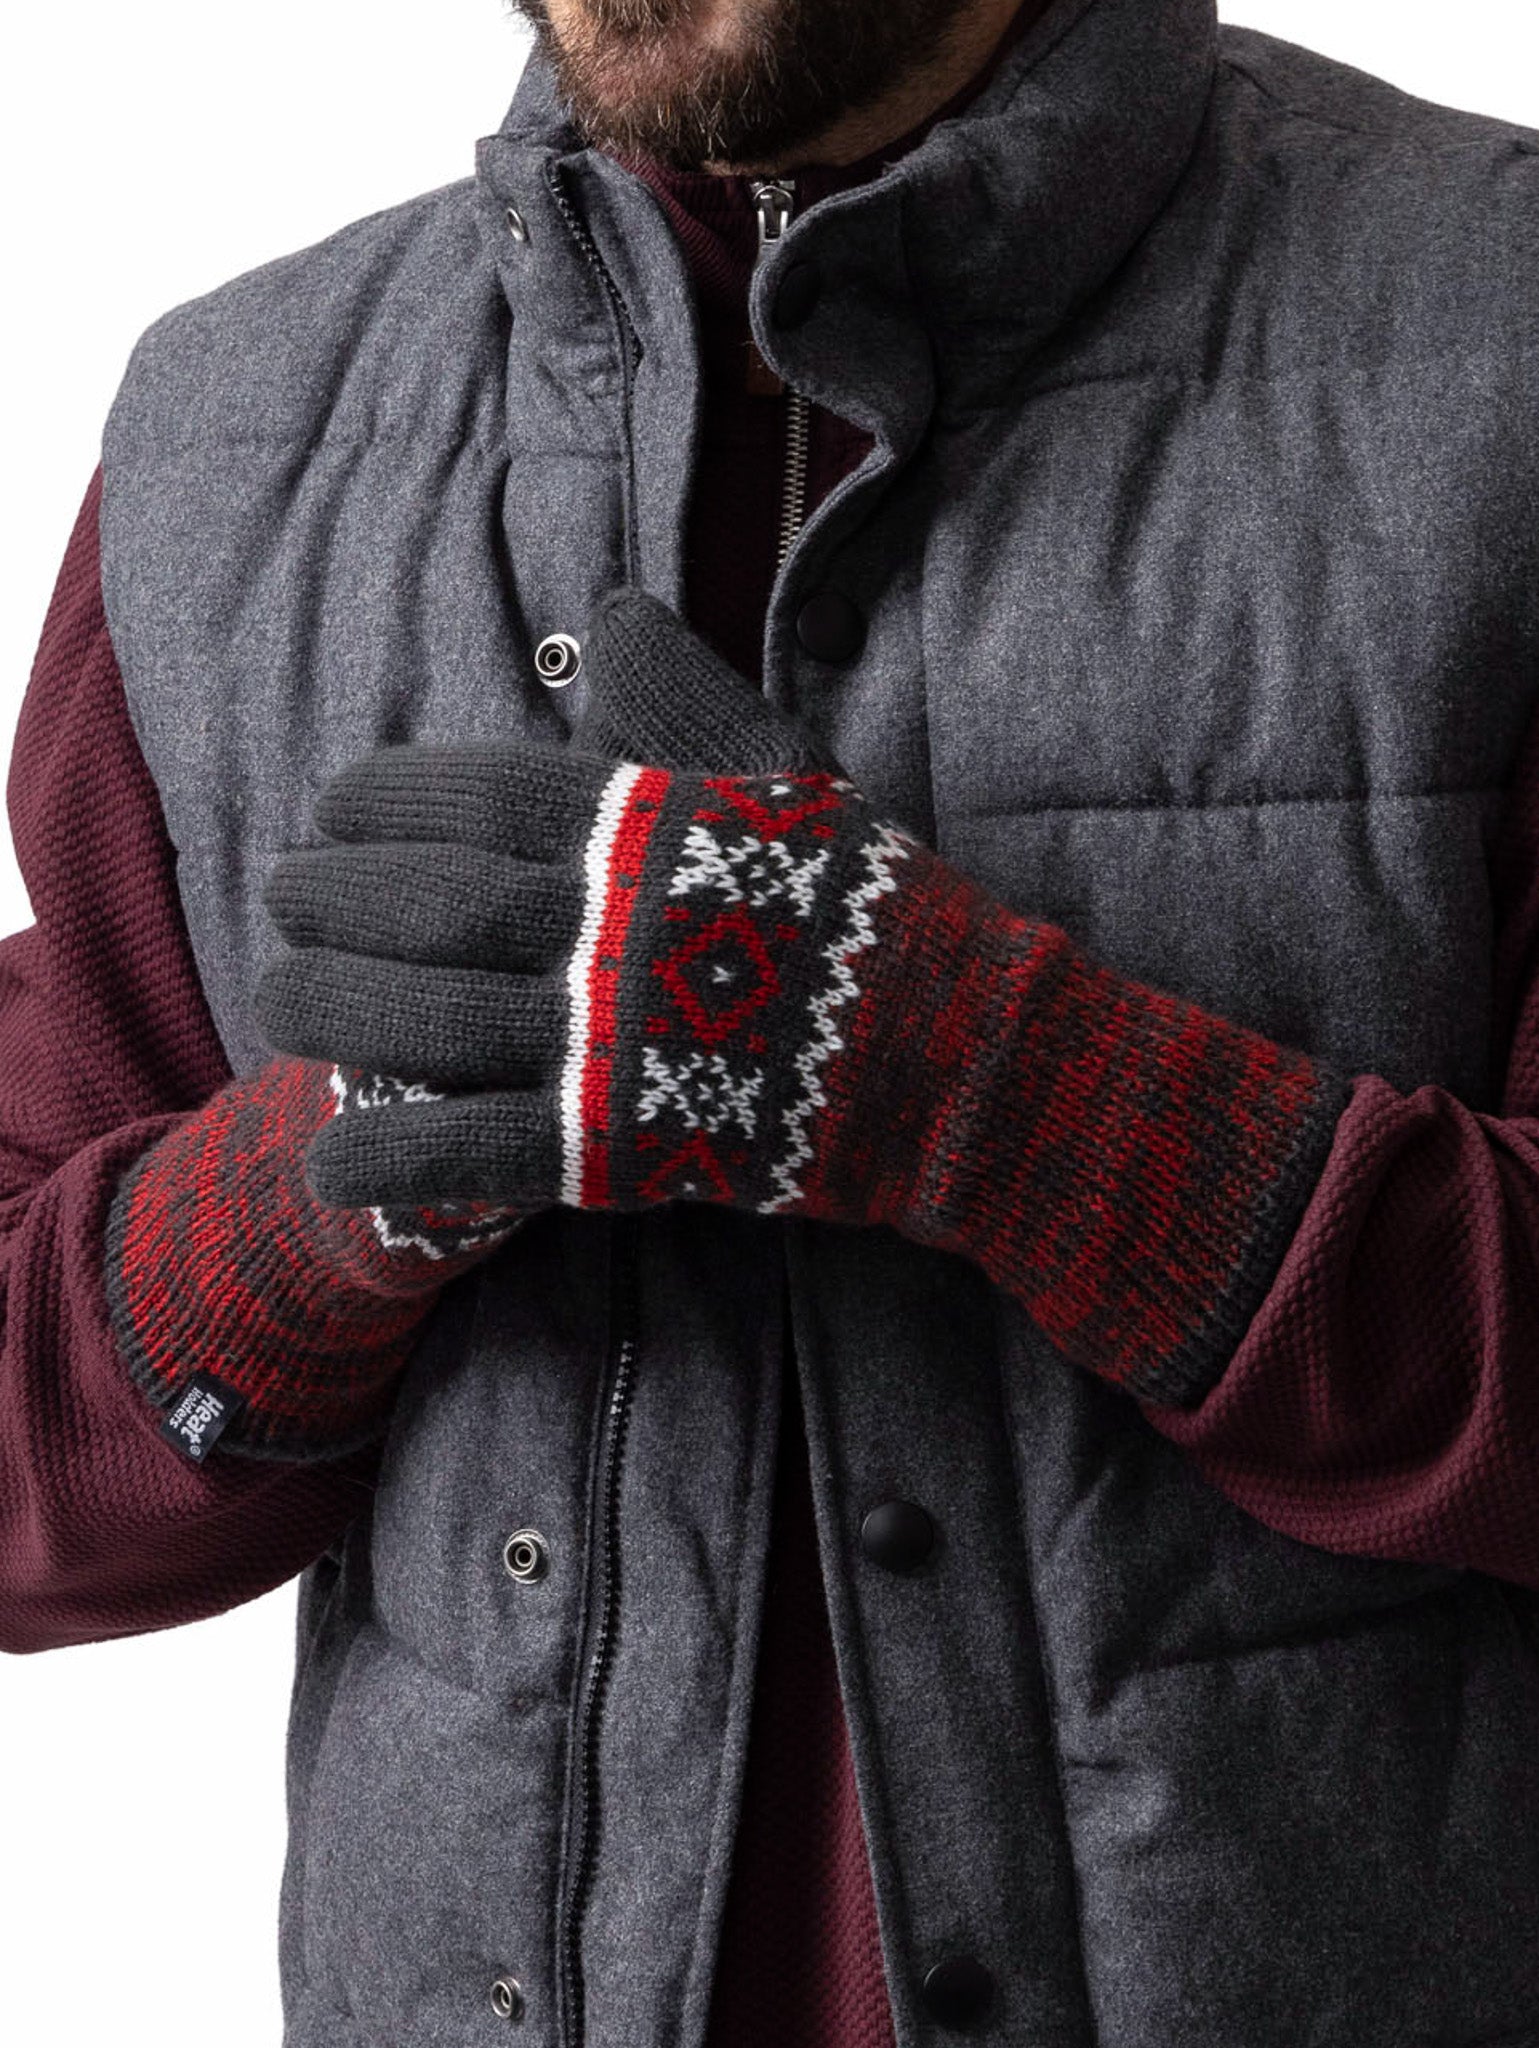 HEAT HOLDERS Karlstad Jacquard Thermal Gloves- Mens